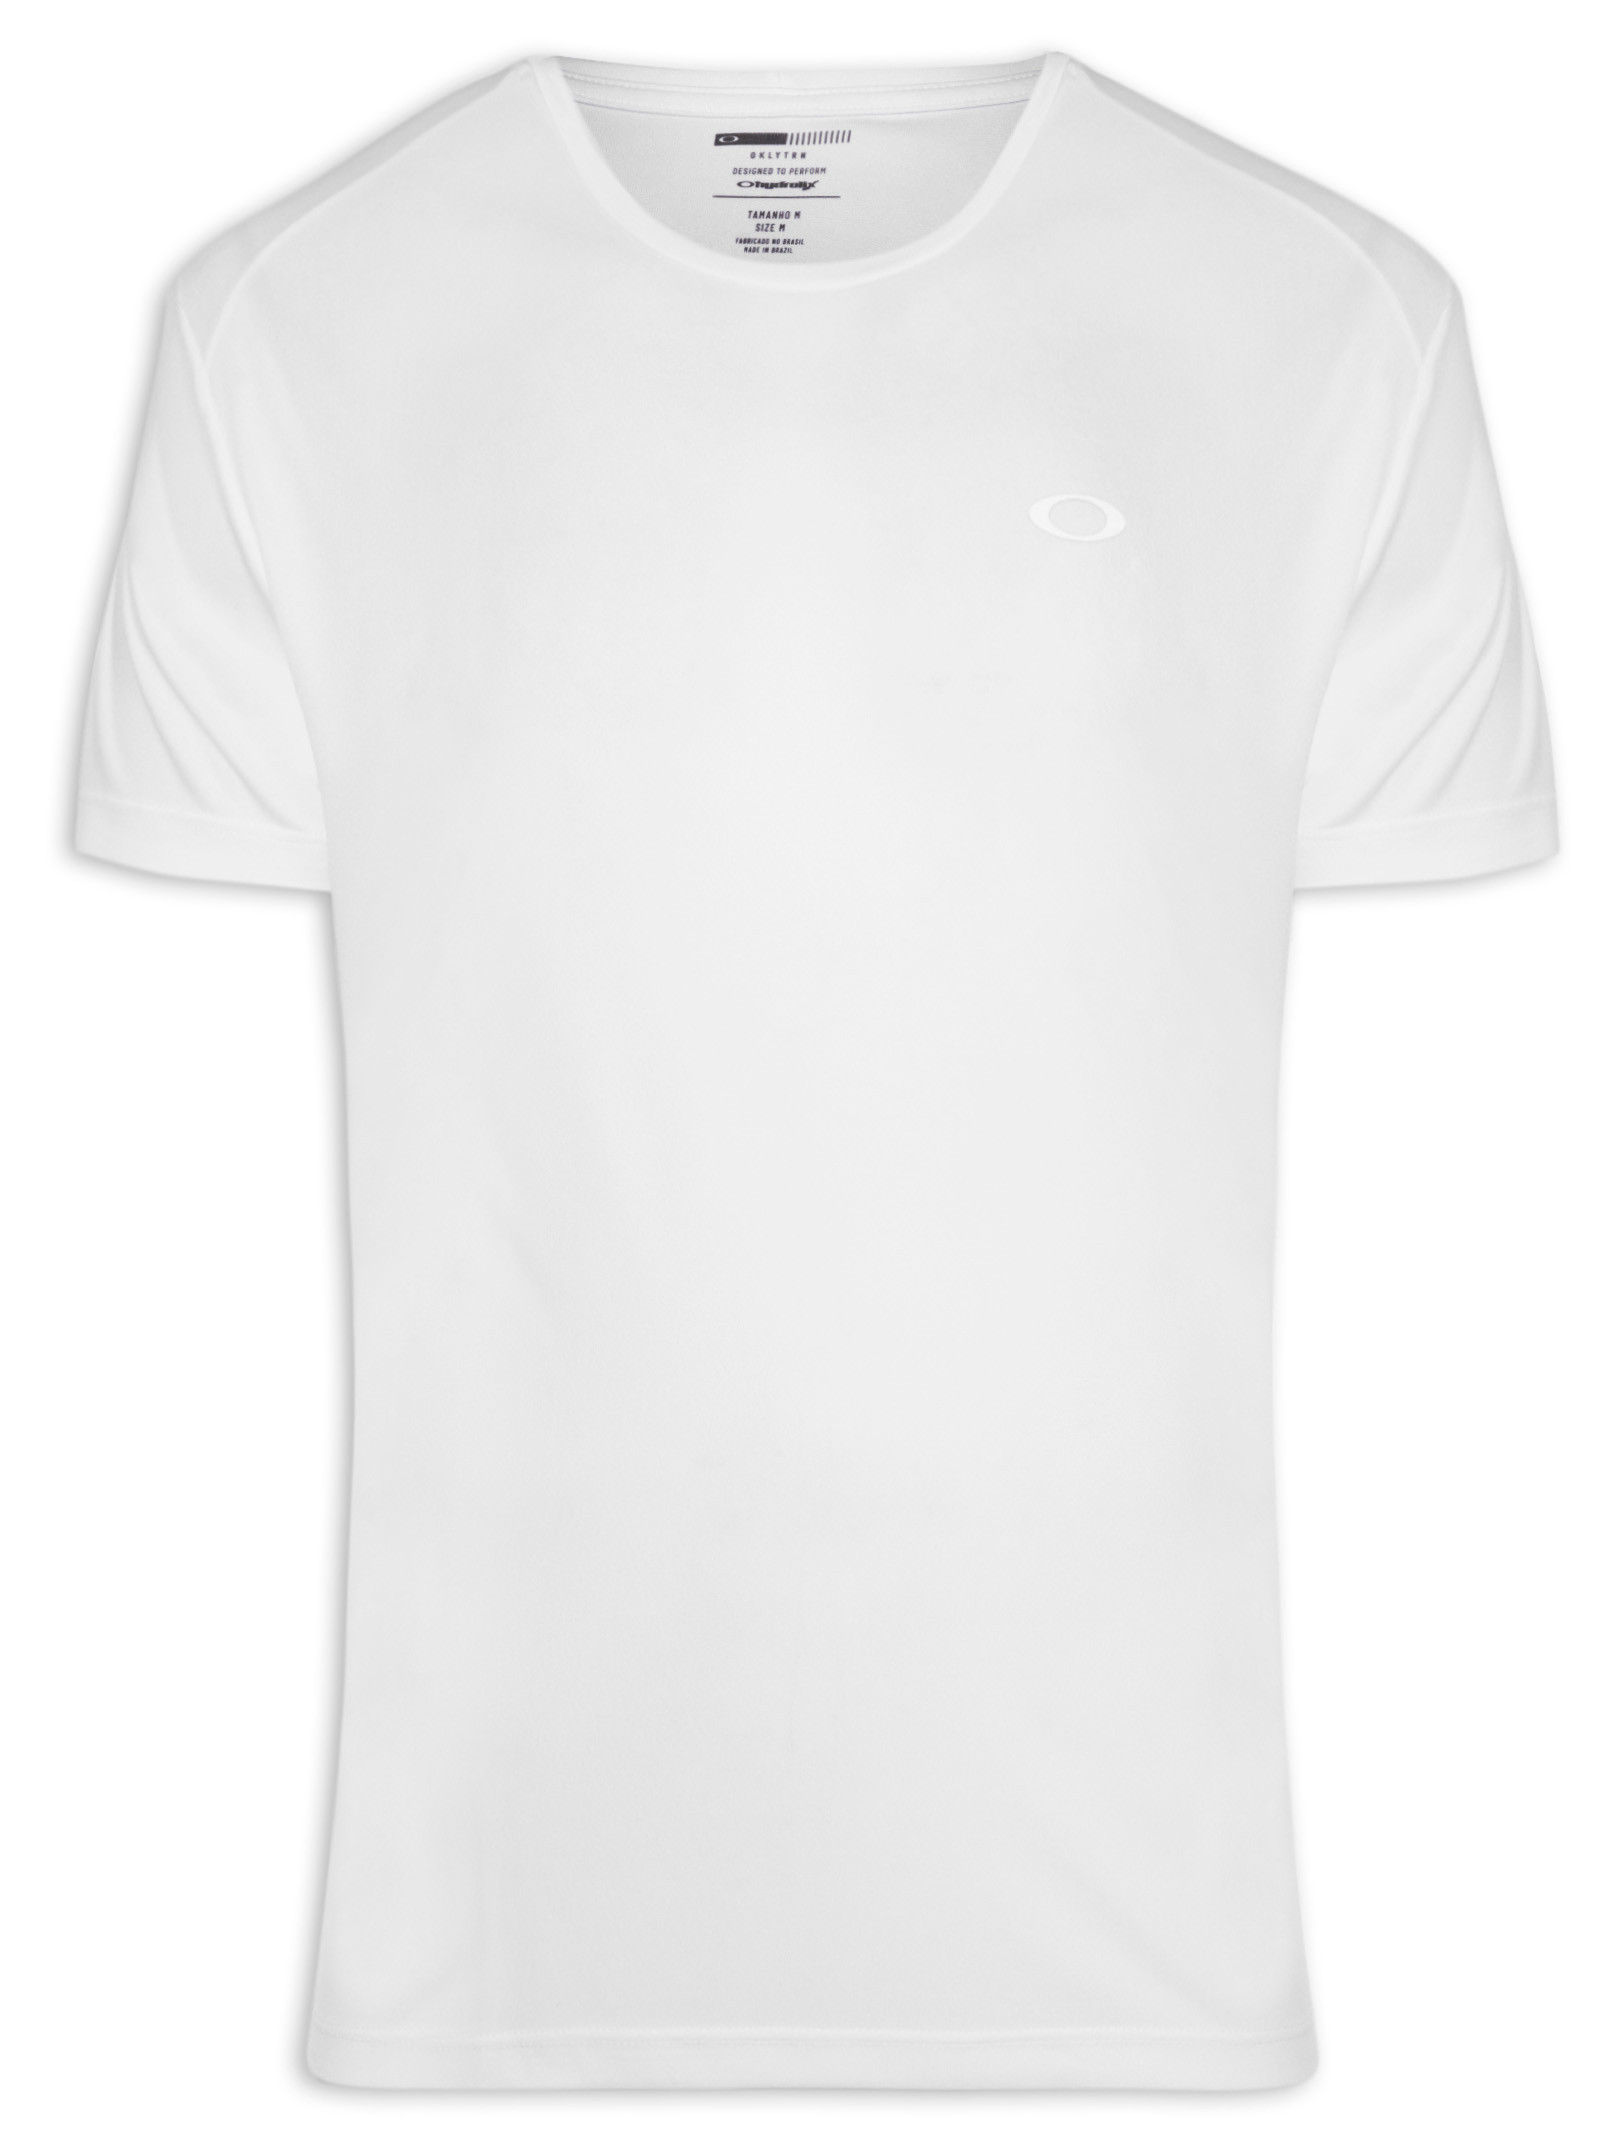 Camiseta Oakley Daily Sport Masculina - Preto